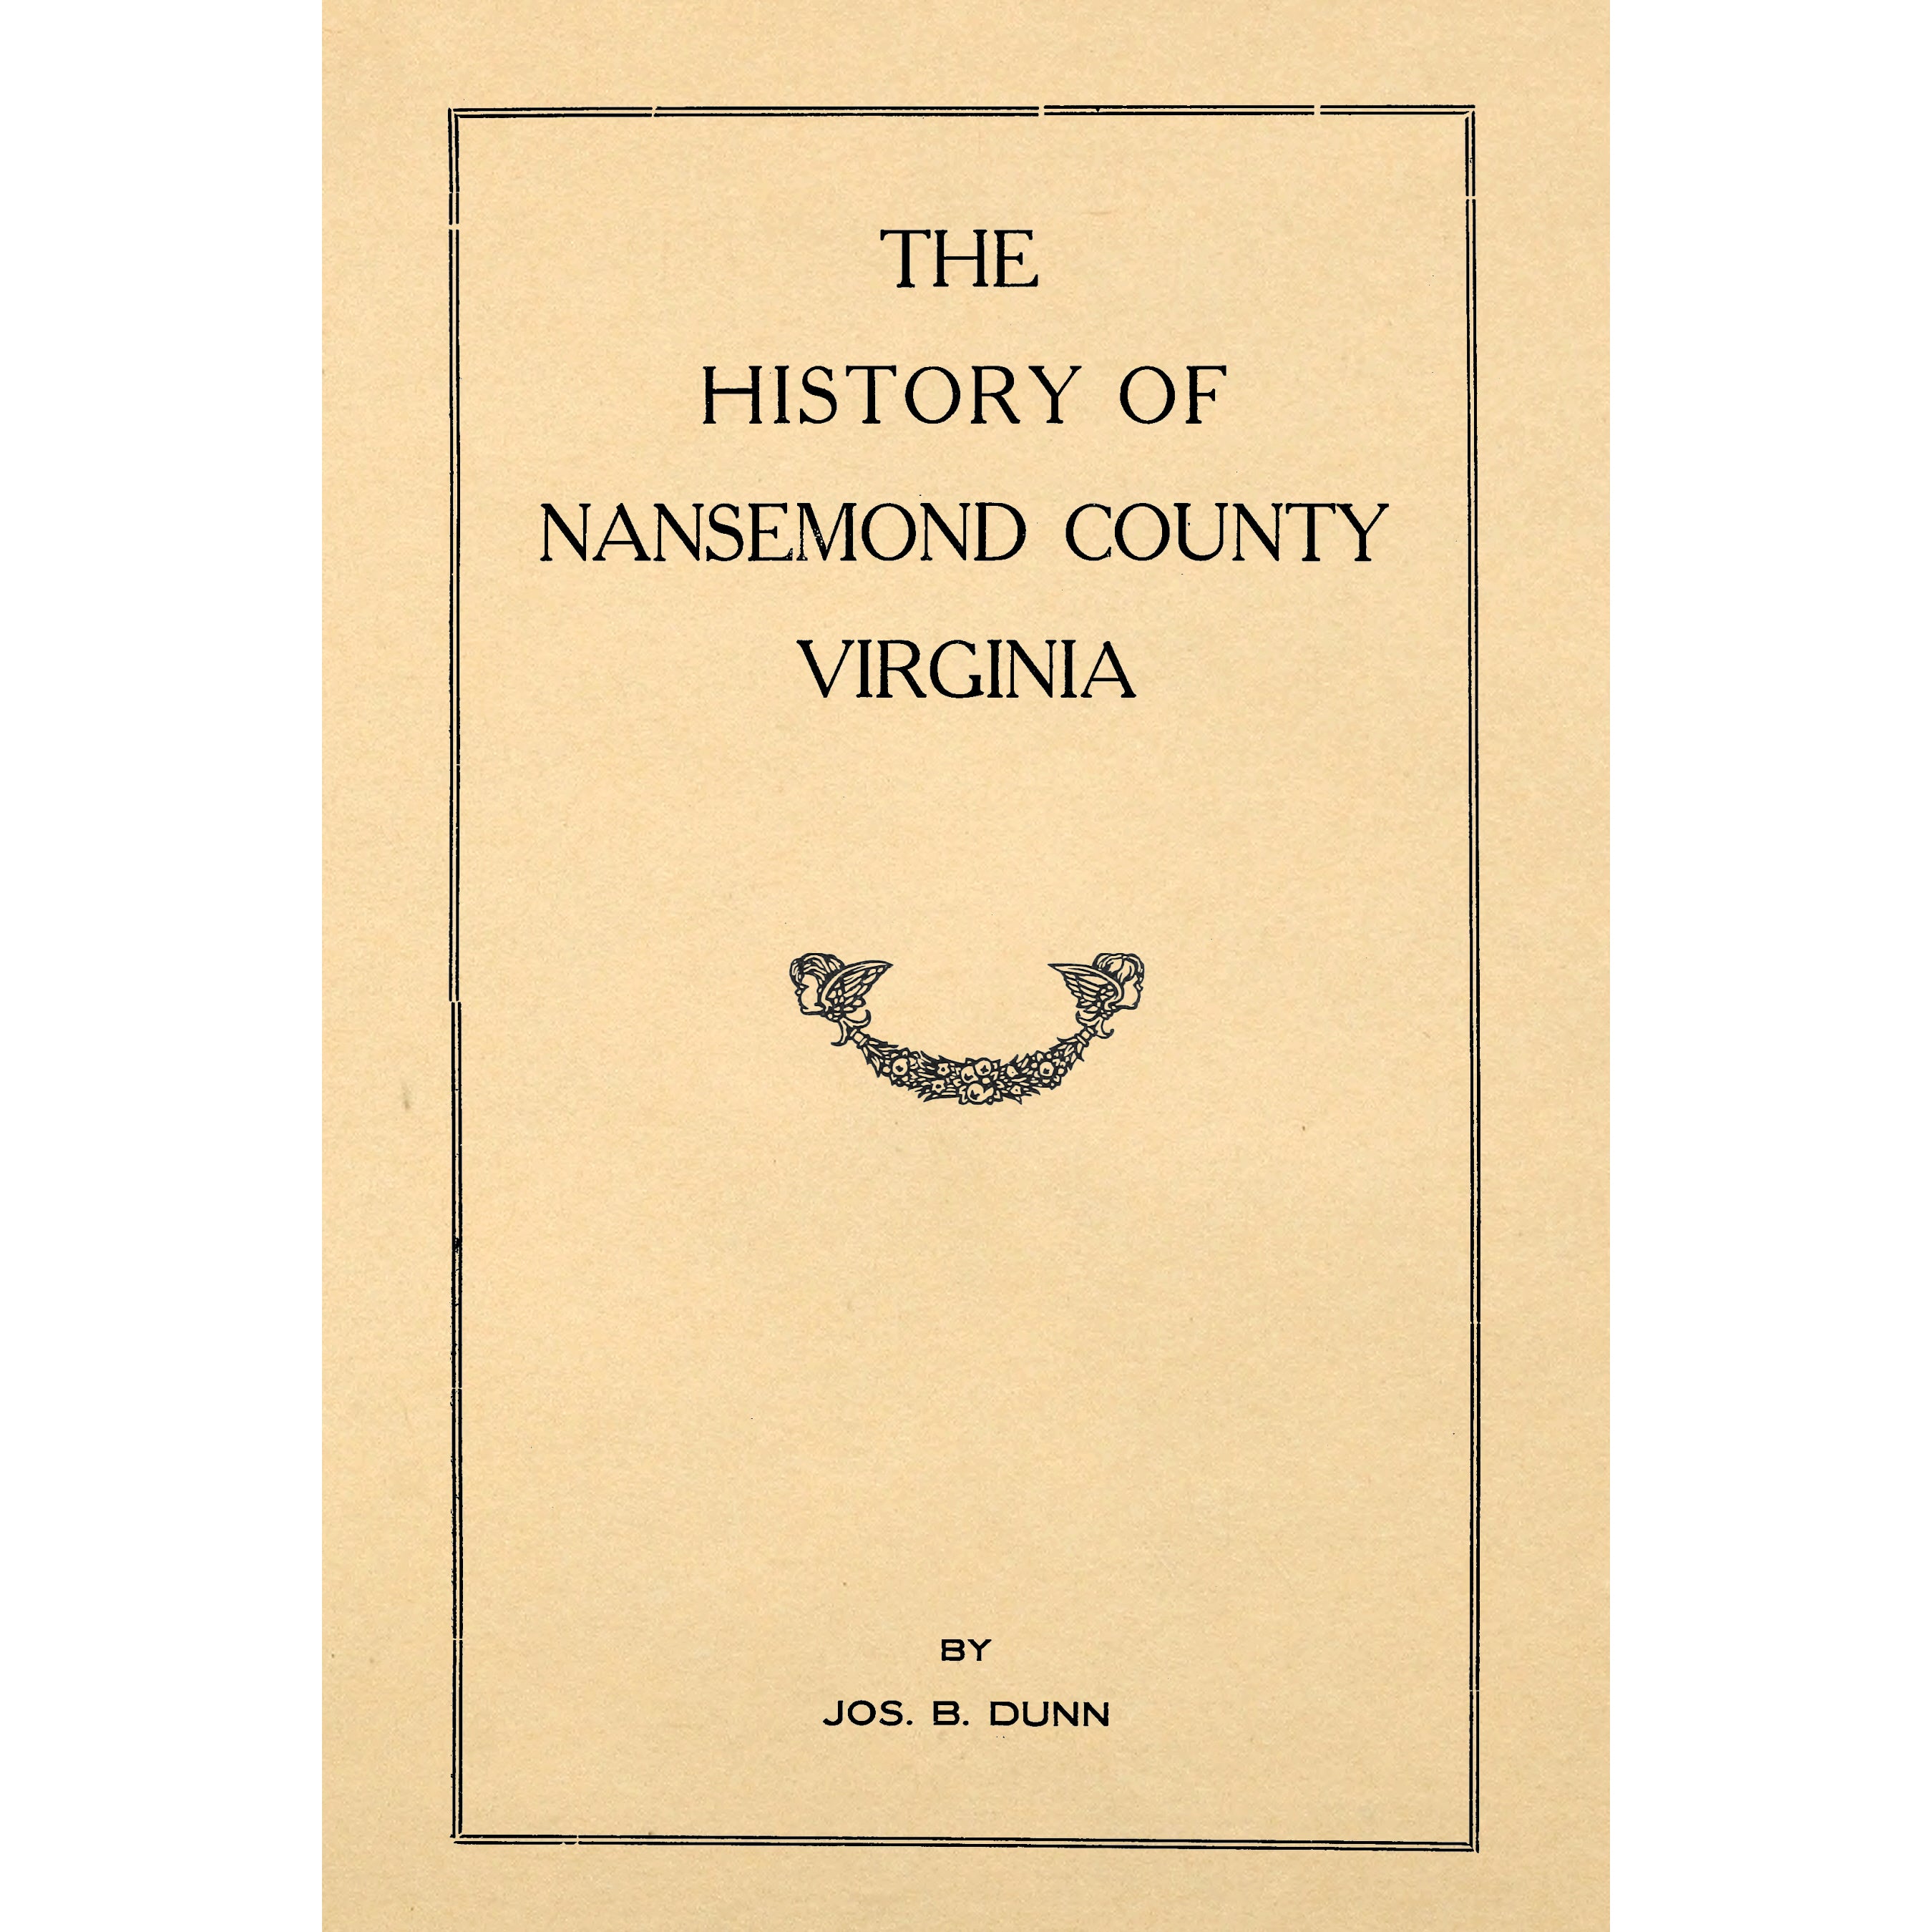 The history of Nansemond County, Virginia